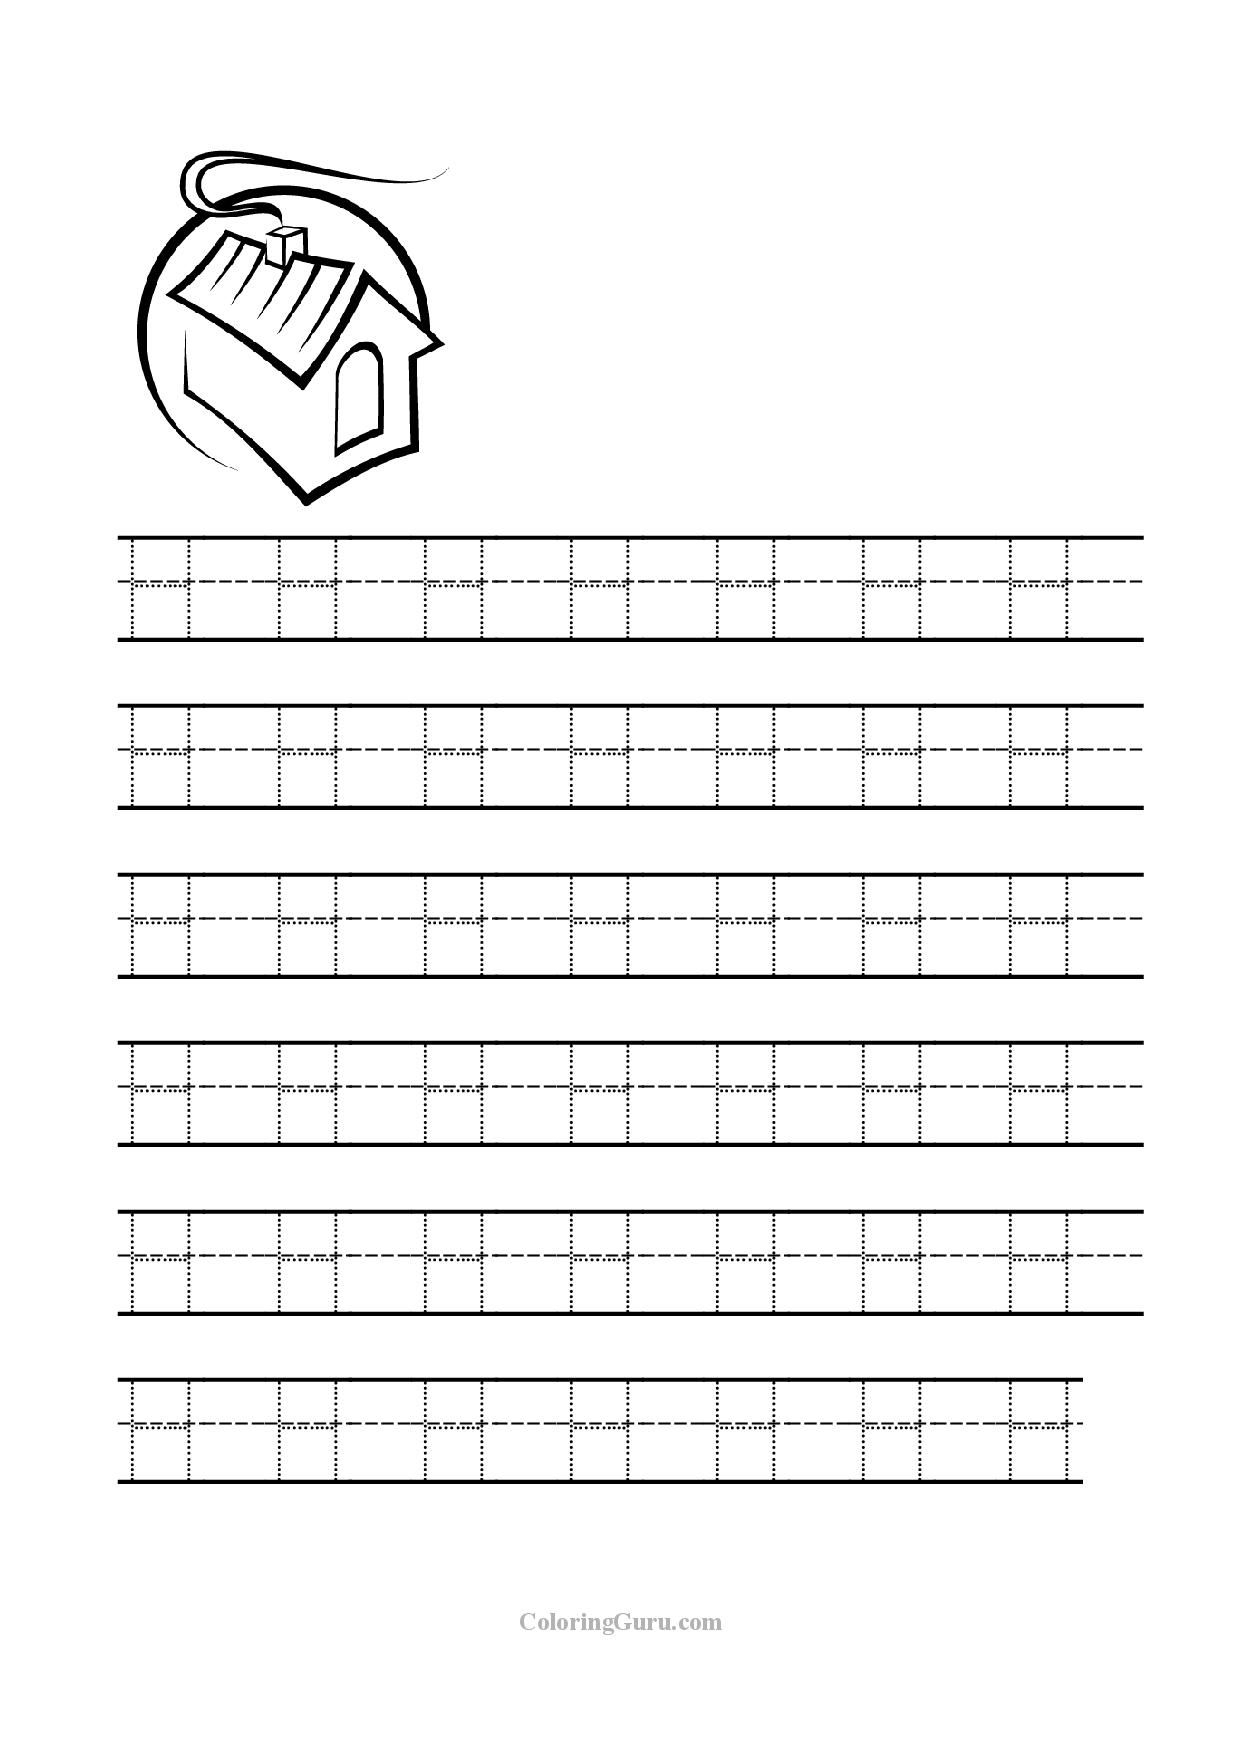 Letter H Tracing Worksheets Worksheets For All | Preschool throughout Letter H Worksheets Free Printables